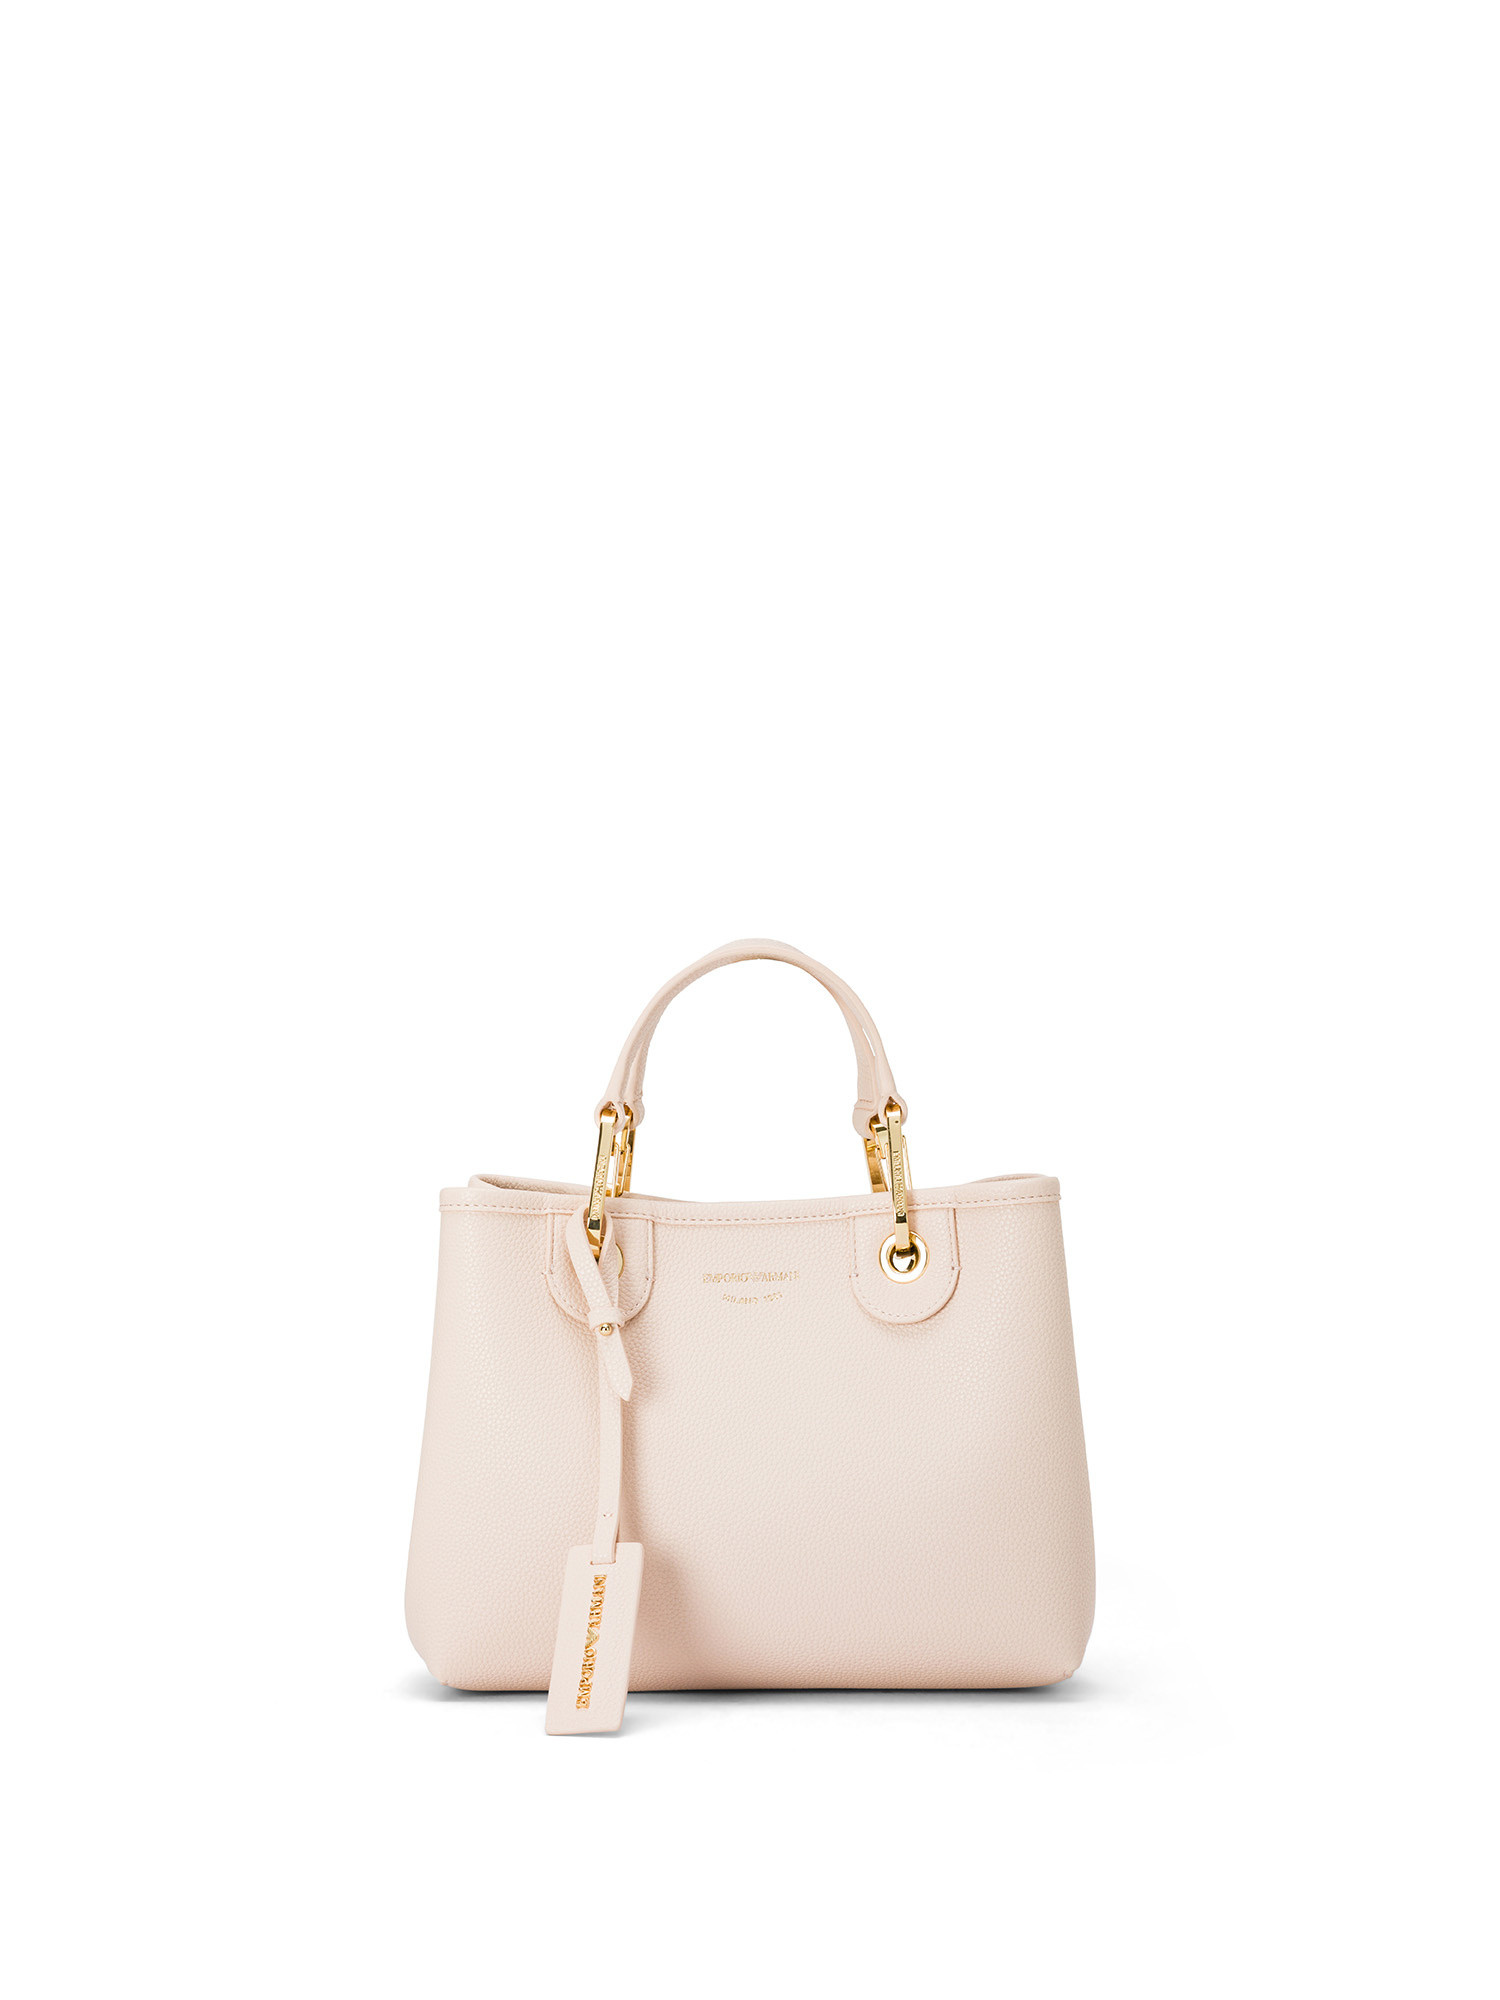 Emporio Armani - Small handbag with deer print, Powder Pink, large image number 0